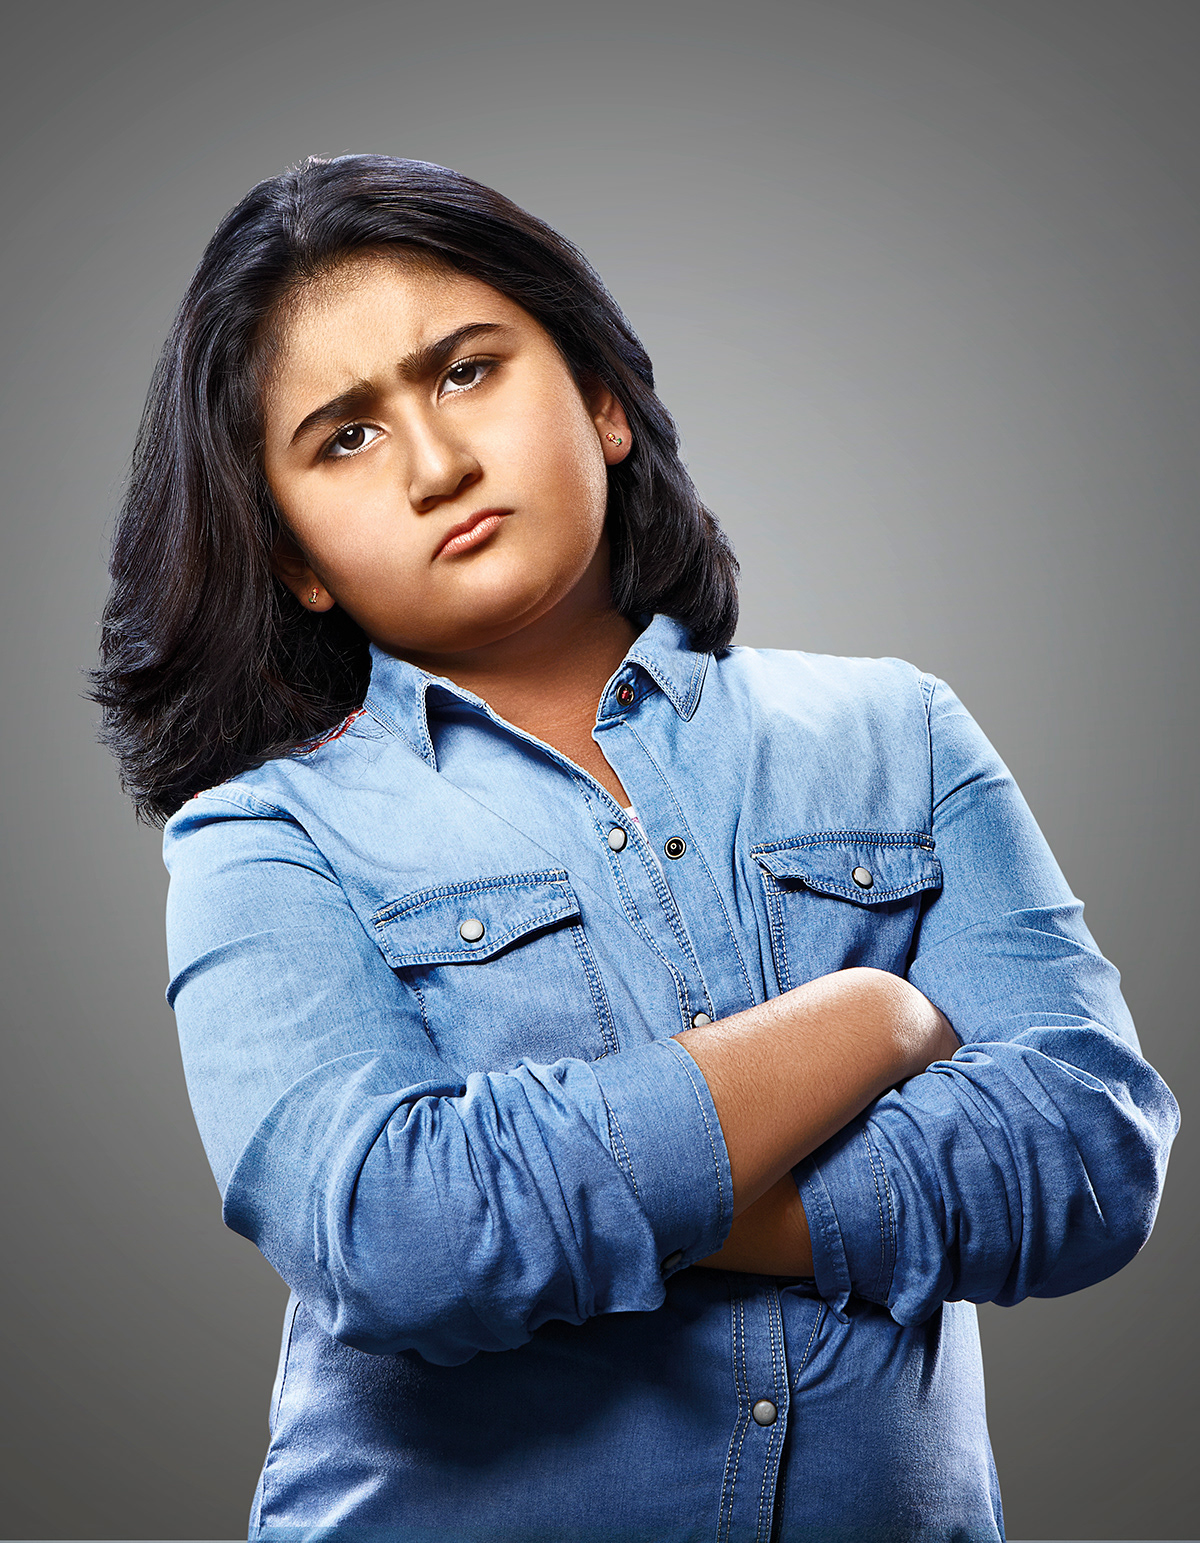 kids children upset angry tantrum naderbilgrami photographer portraits yogurt campaigns mydubai mydxb